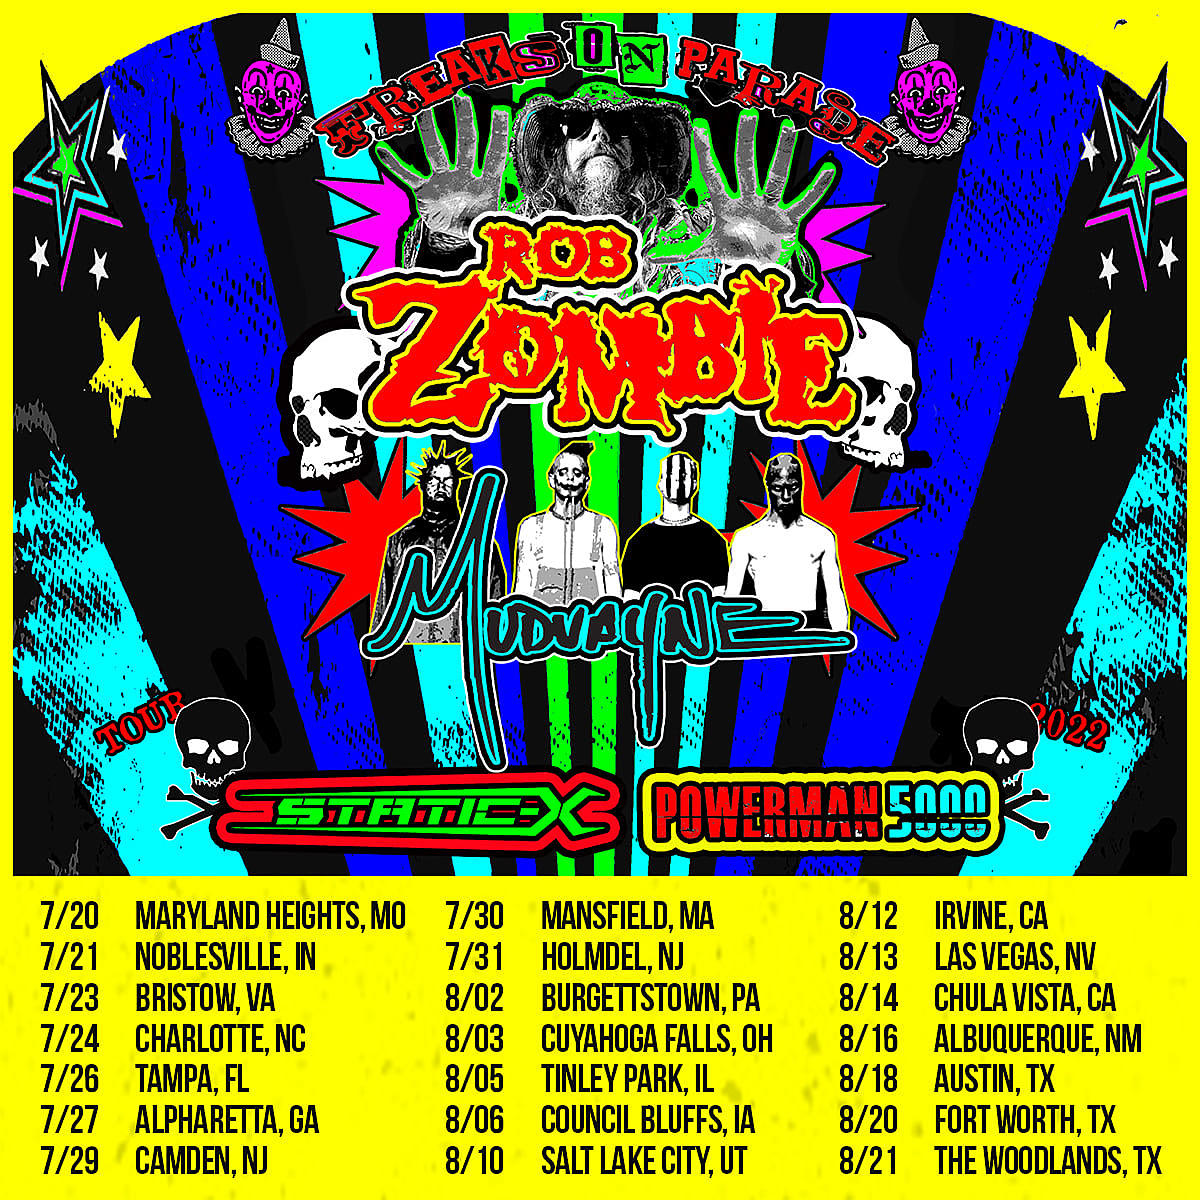 Rob Zombie & Mudvayne announce summer tour with Static-X, Powerman 5000